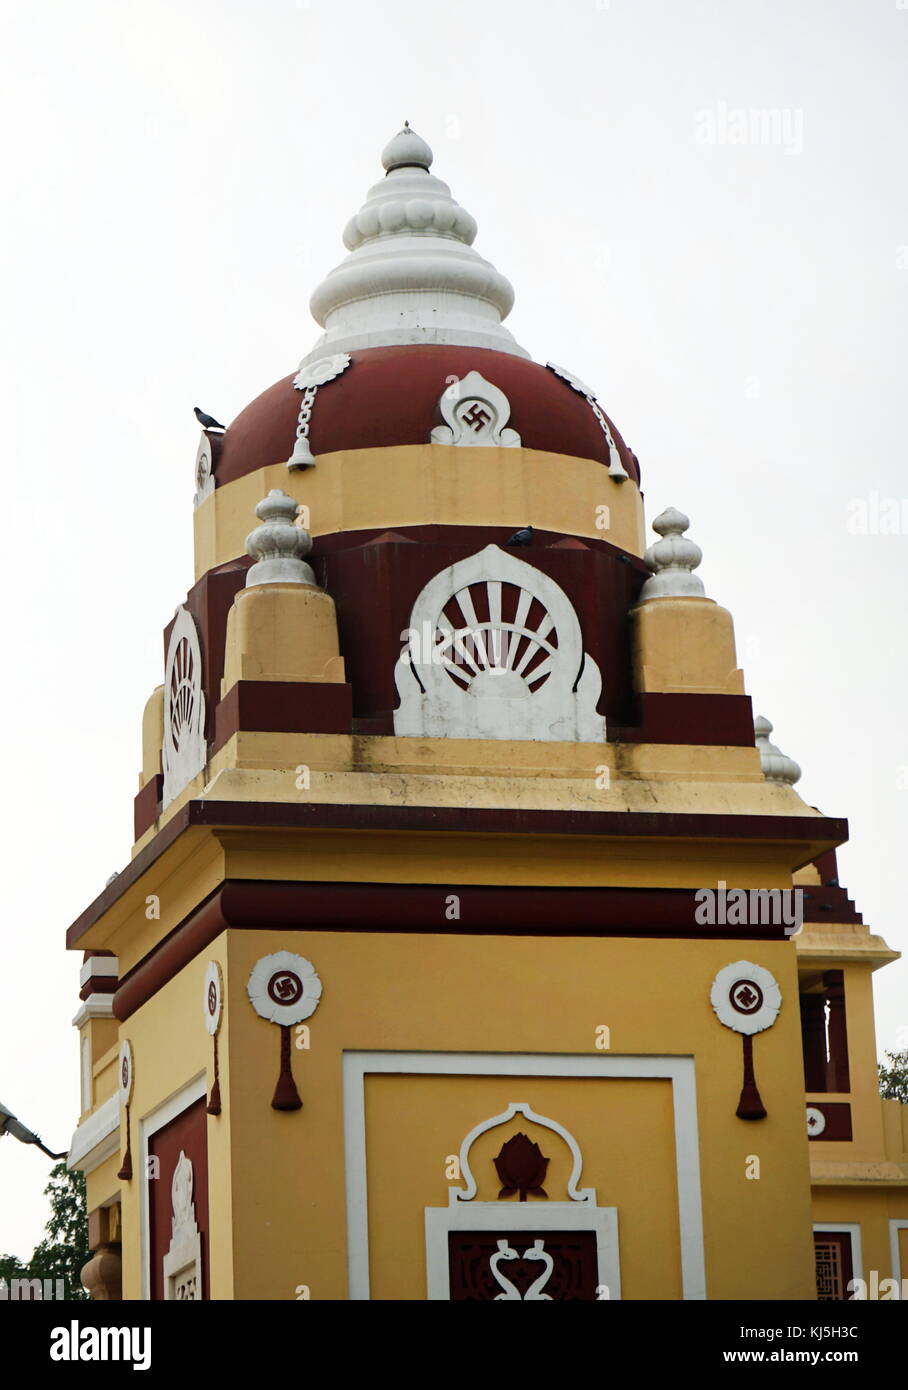 Un Temple Hindou de Delhi, Inde Banque D'Images